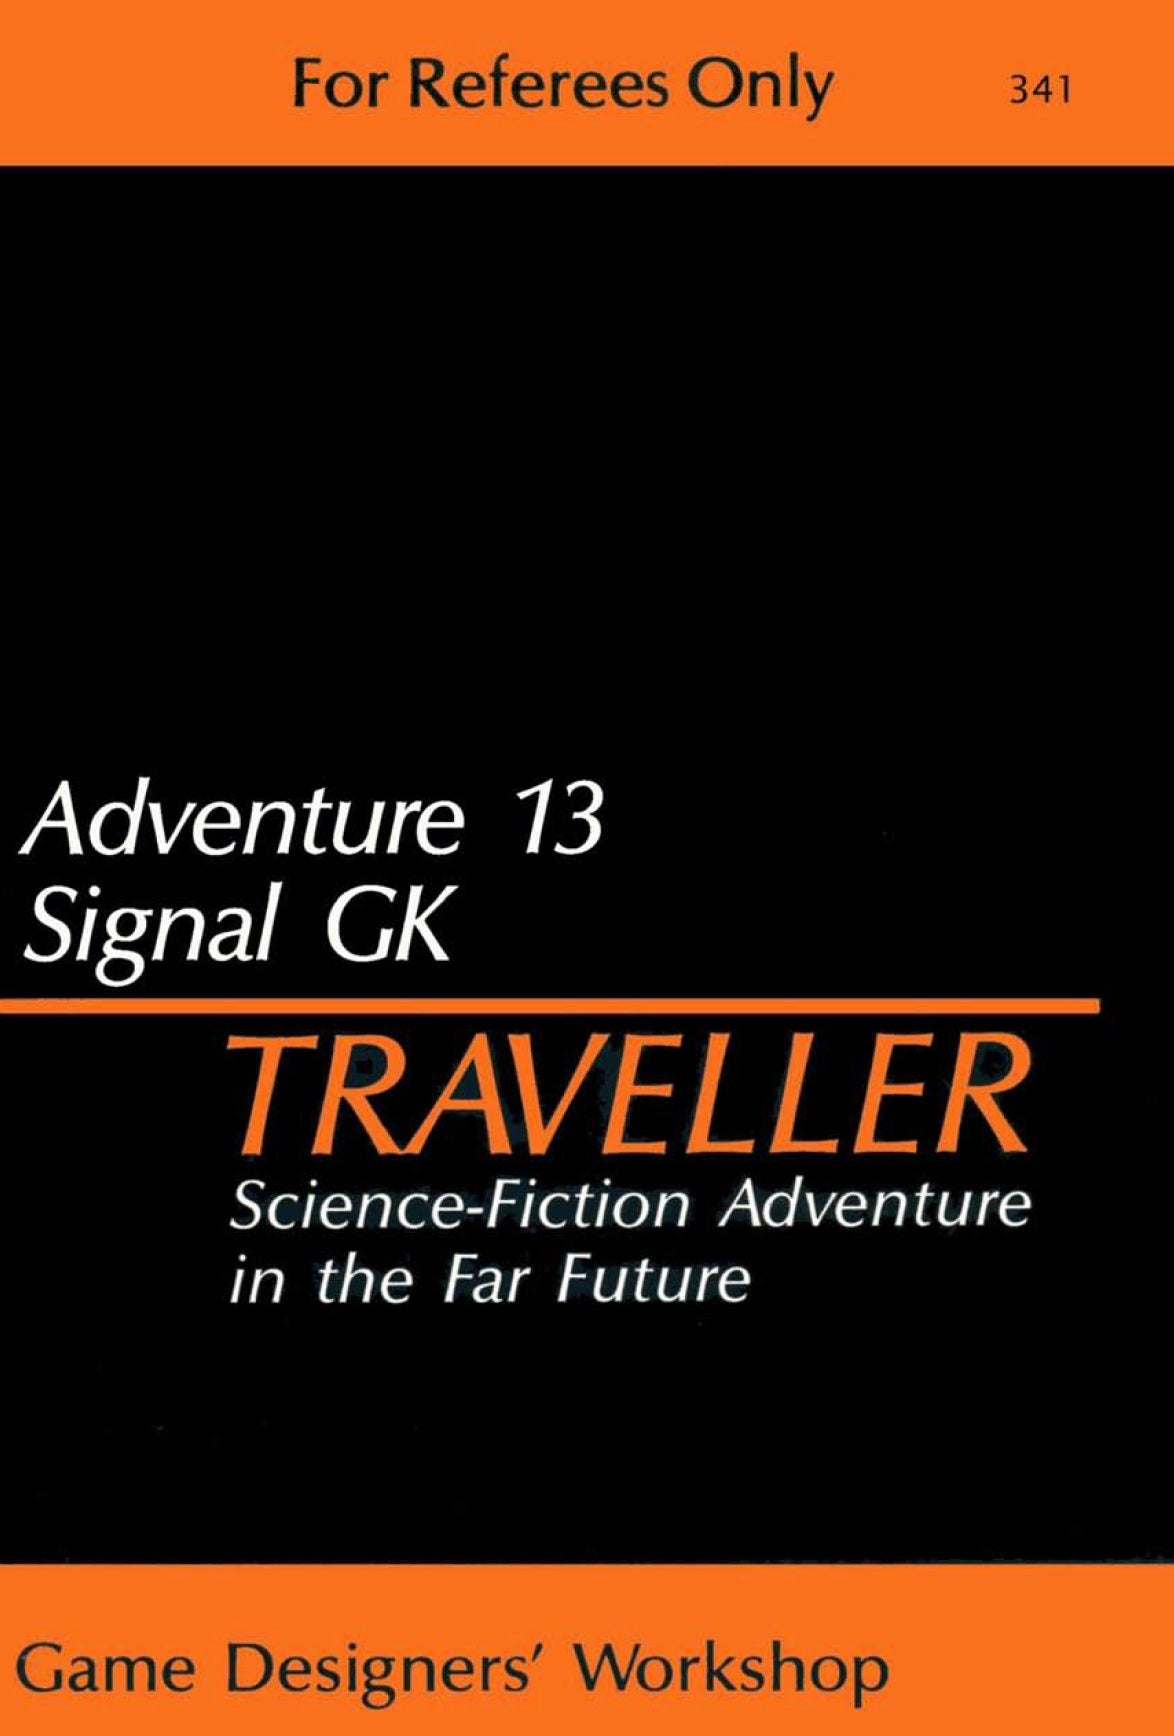 Adventure 13: Signal GK ebook